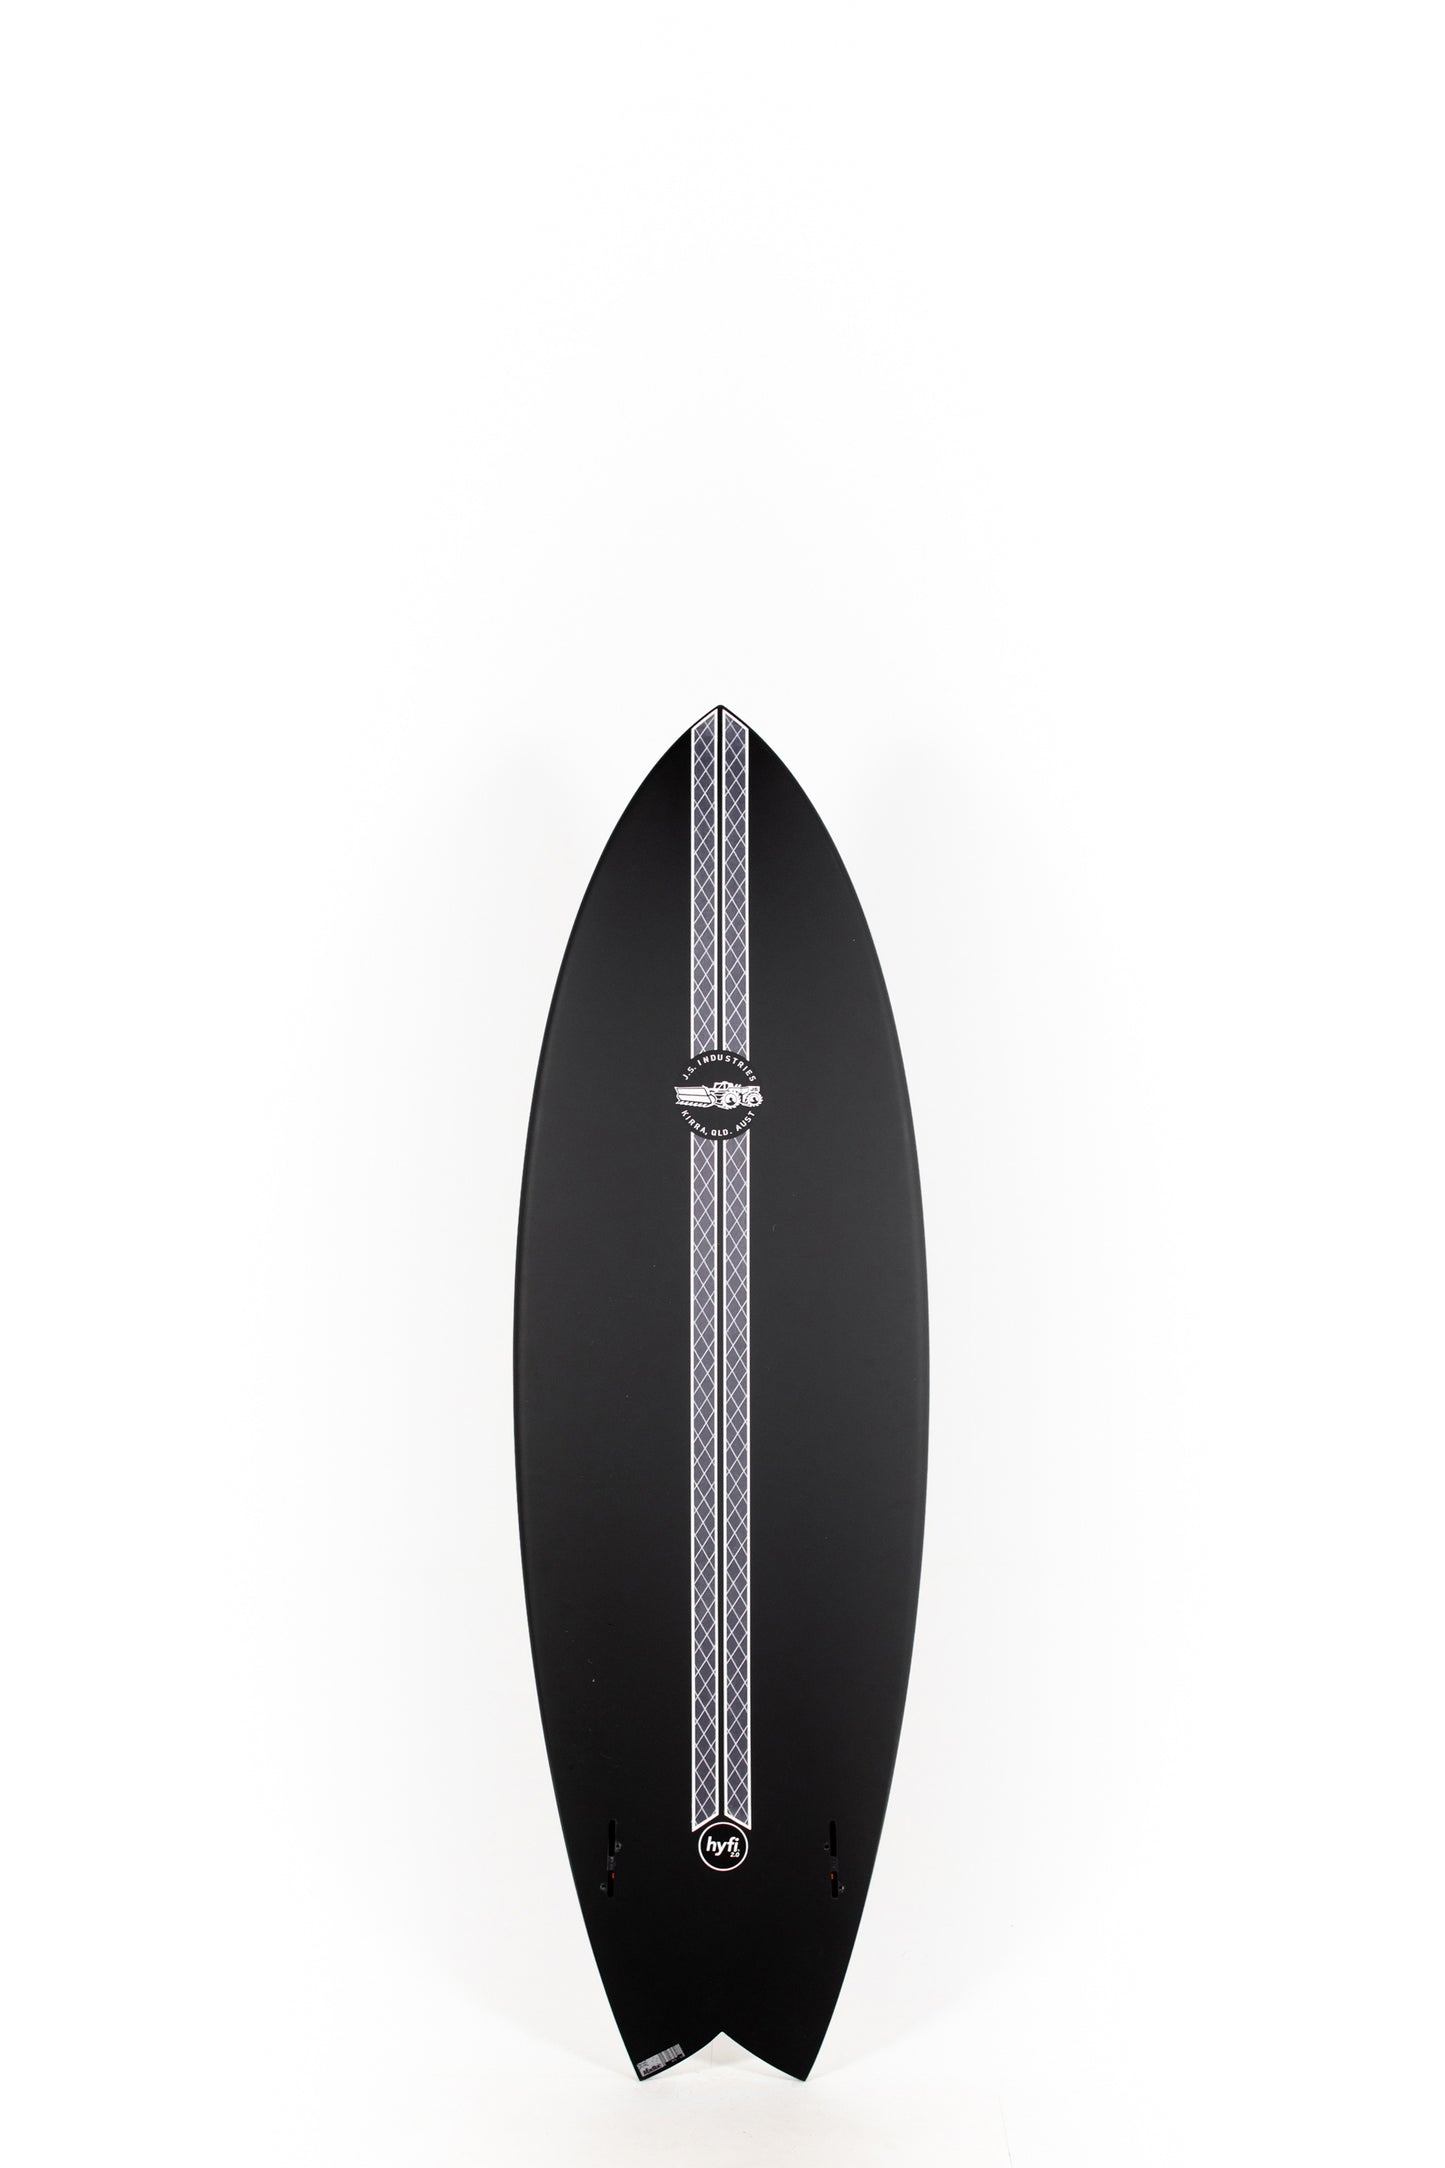 Pukas Surf Shop - JS Surfboards - BLACK BARON HYFI - 5'10" x 20 3/4 x 2 5/8 x 35,4L - BLACKBHYFI510